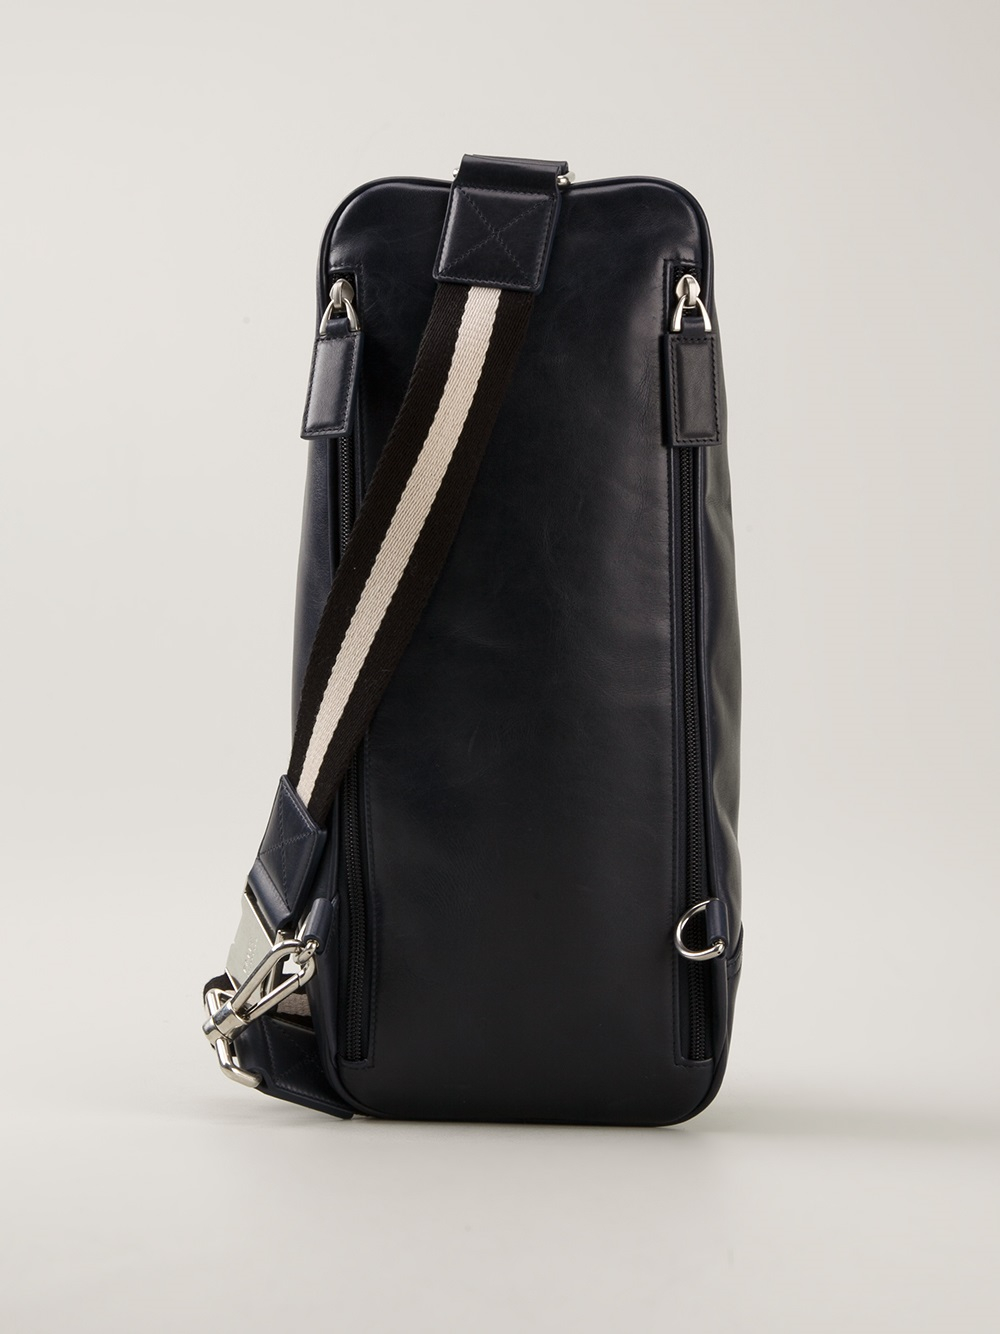 Lyst - Bally Single Strap Backpack in Blue for Men